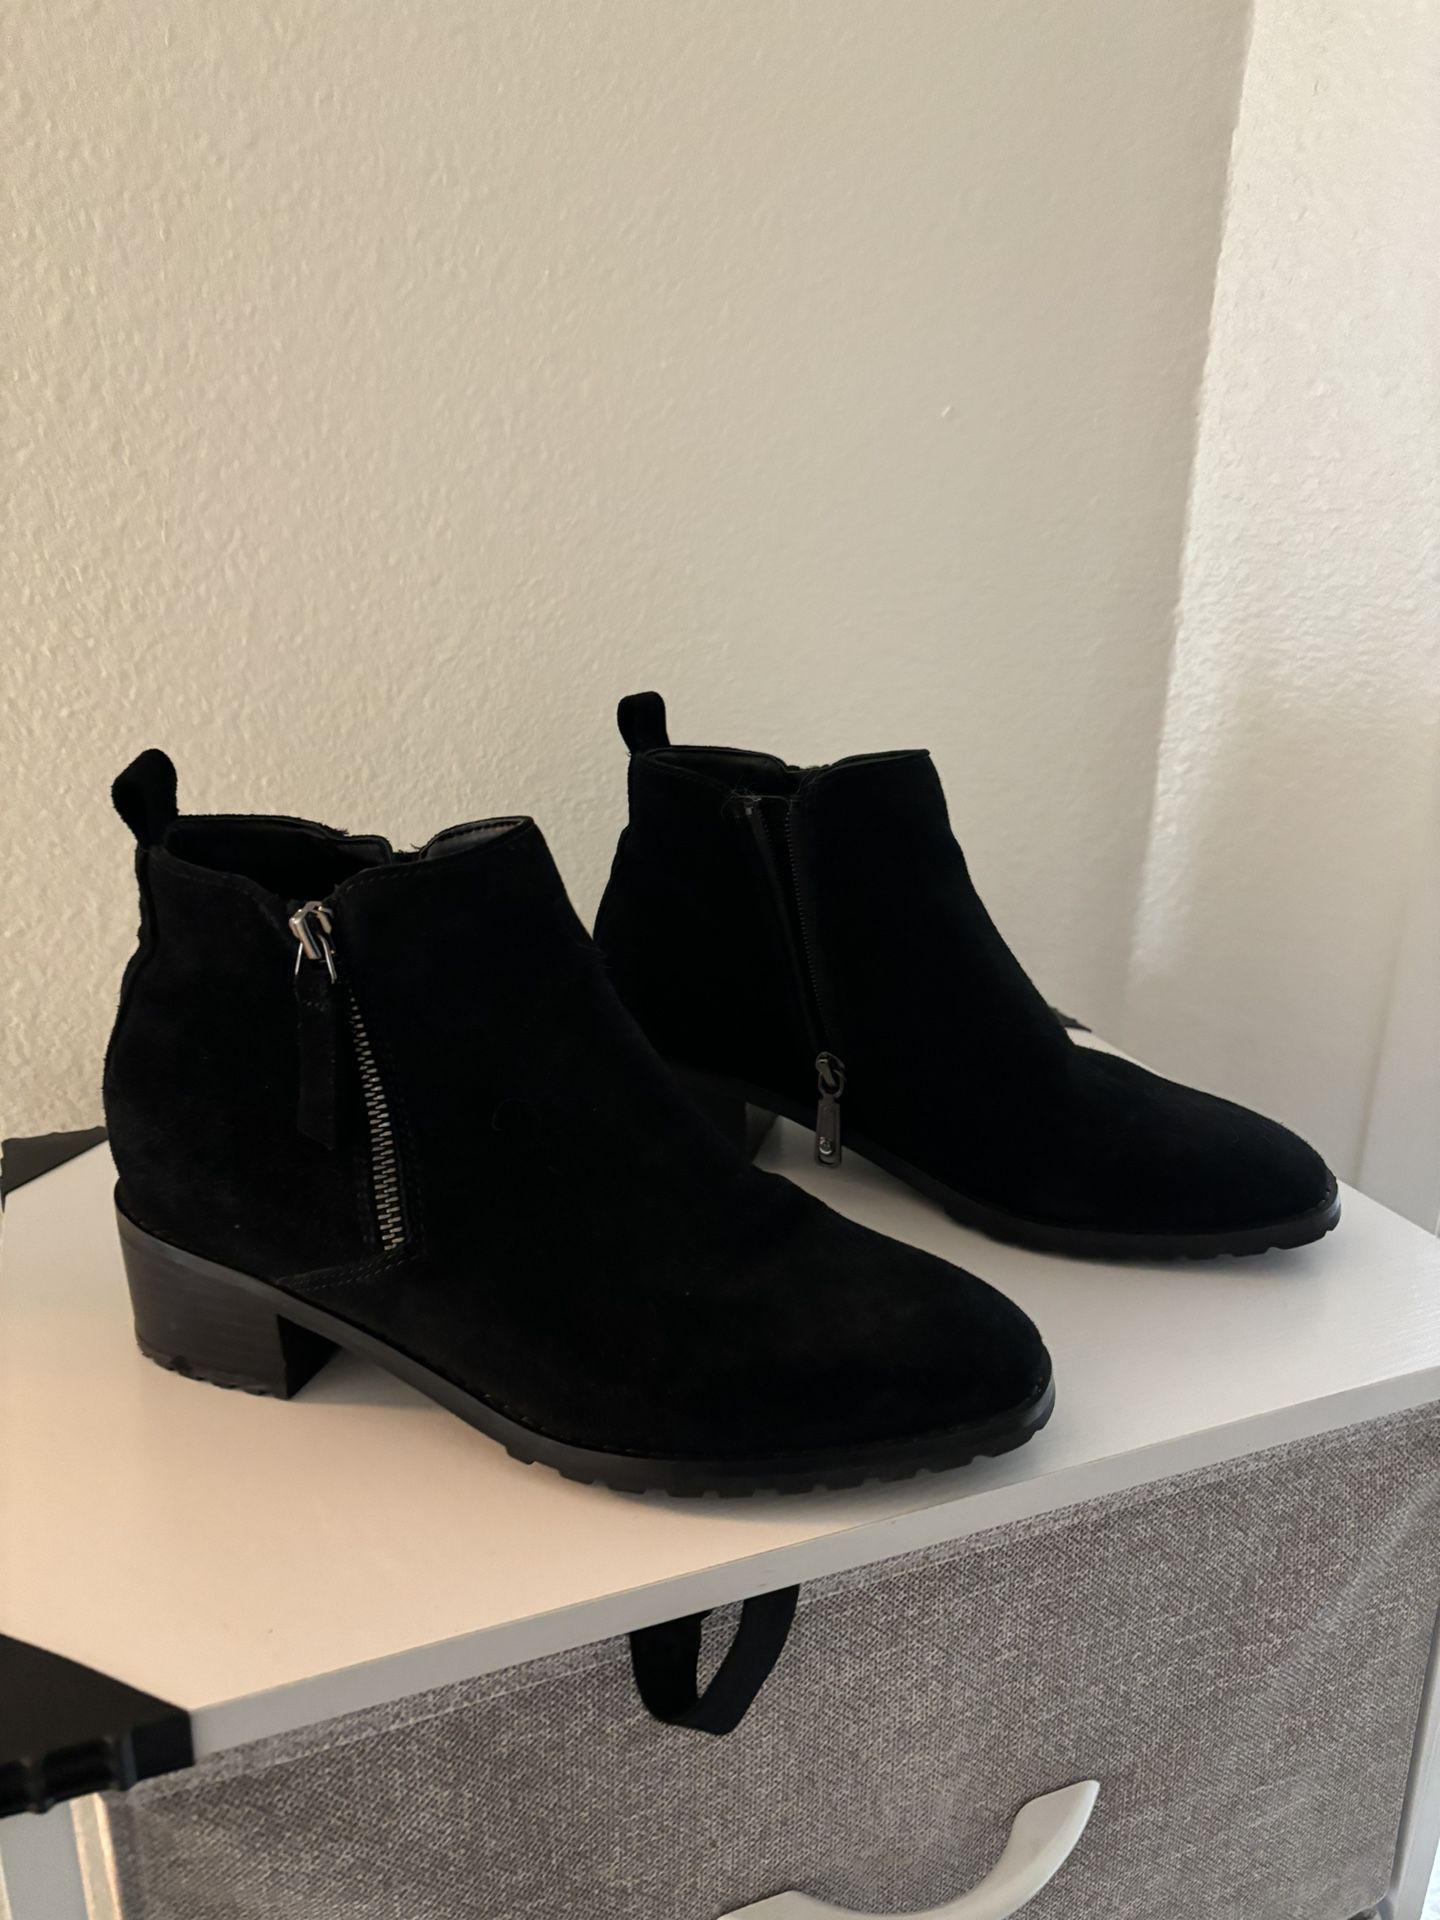 New Black Bootie Shoes